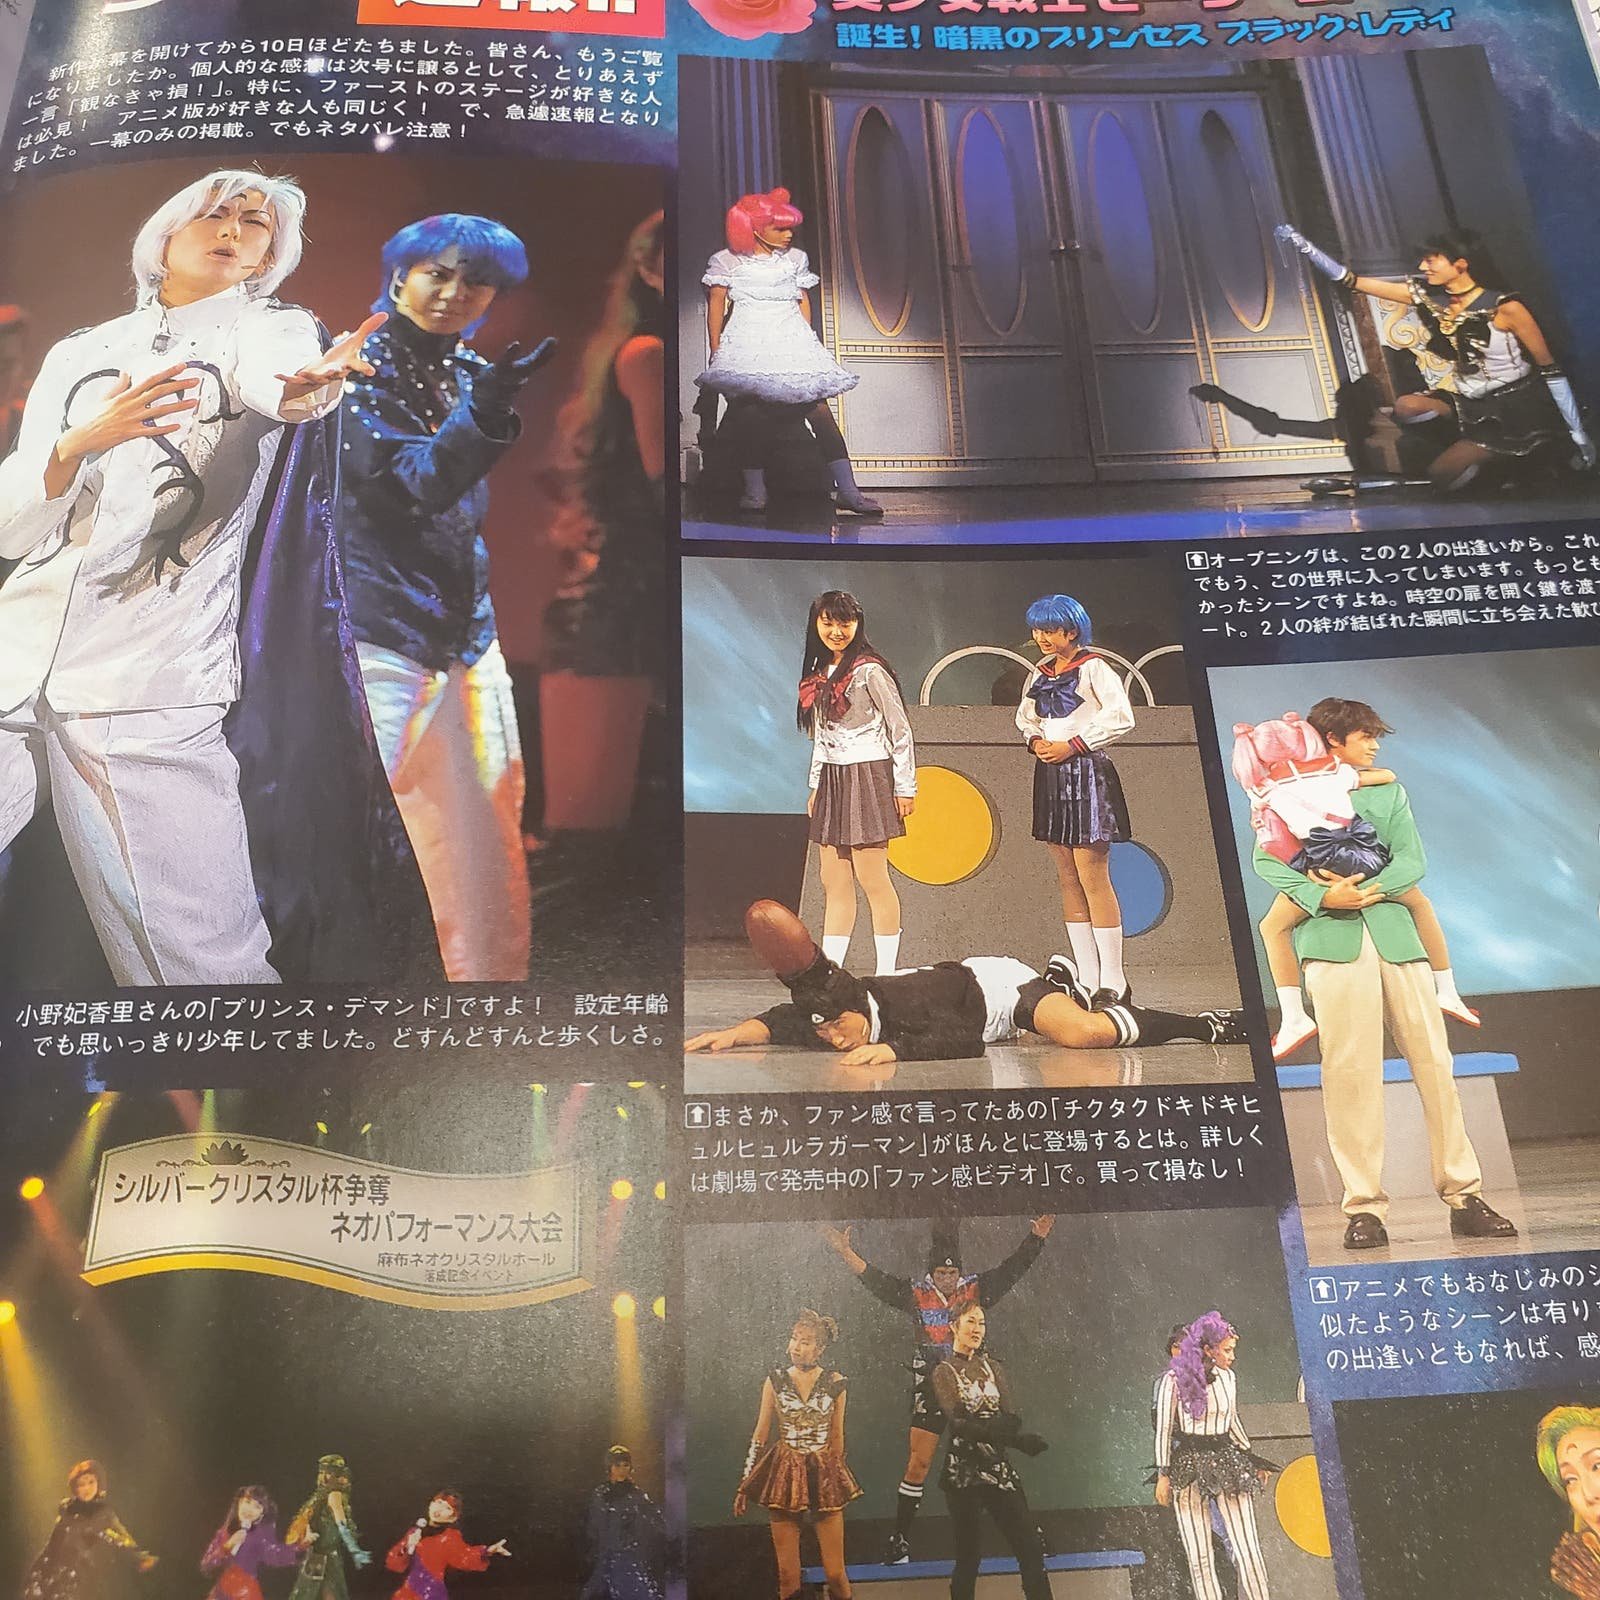 DAMAGED Hyper Hobby Vol 36 Magazine Star Wars Sailor Moon Cowboy Bebop 71UhLxj3u